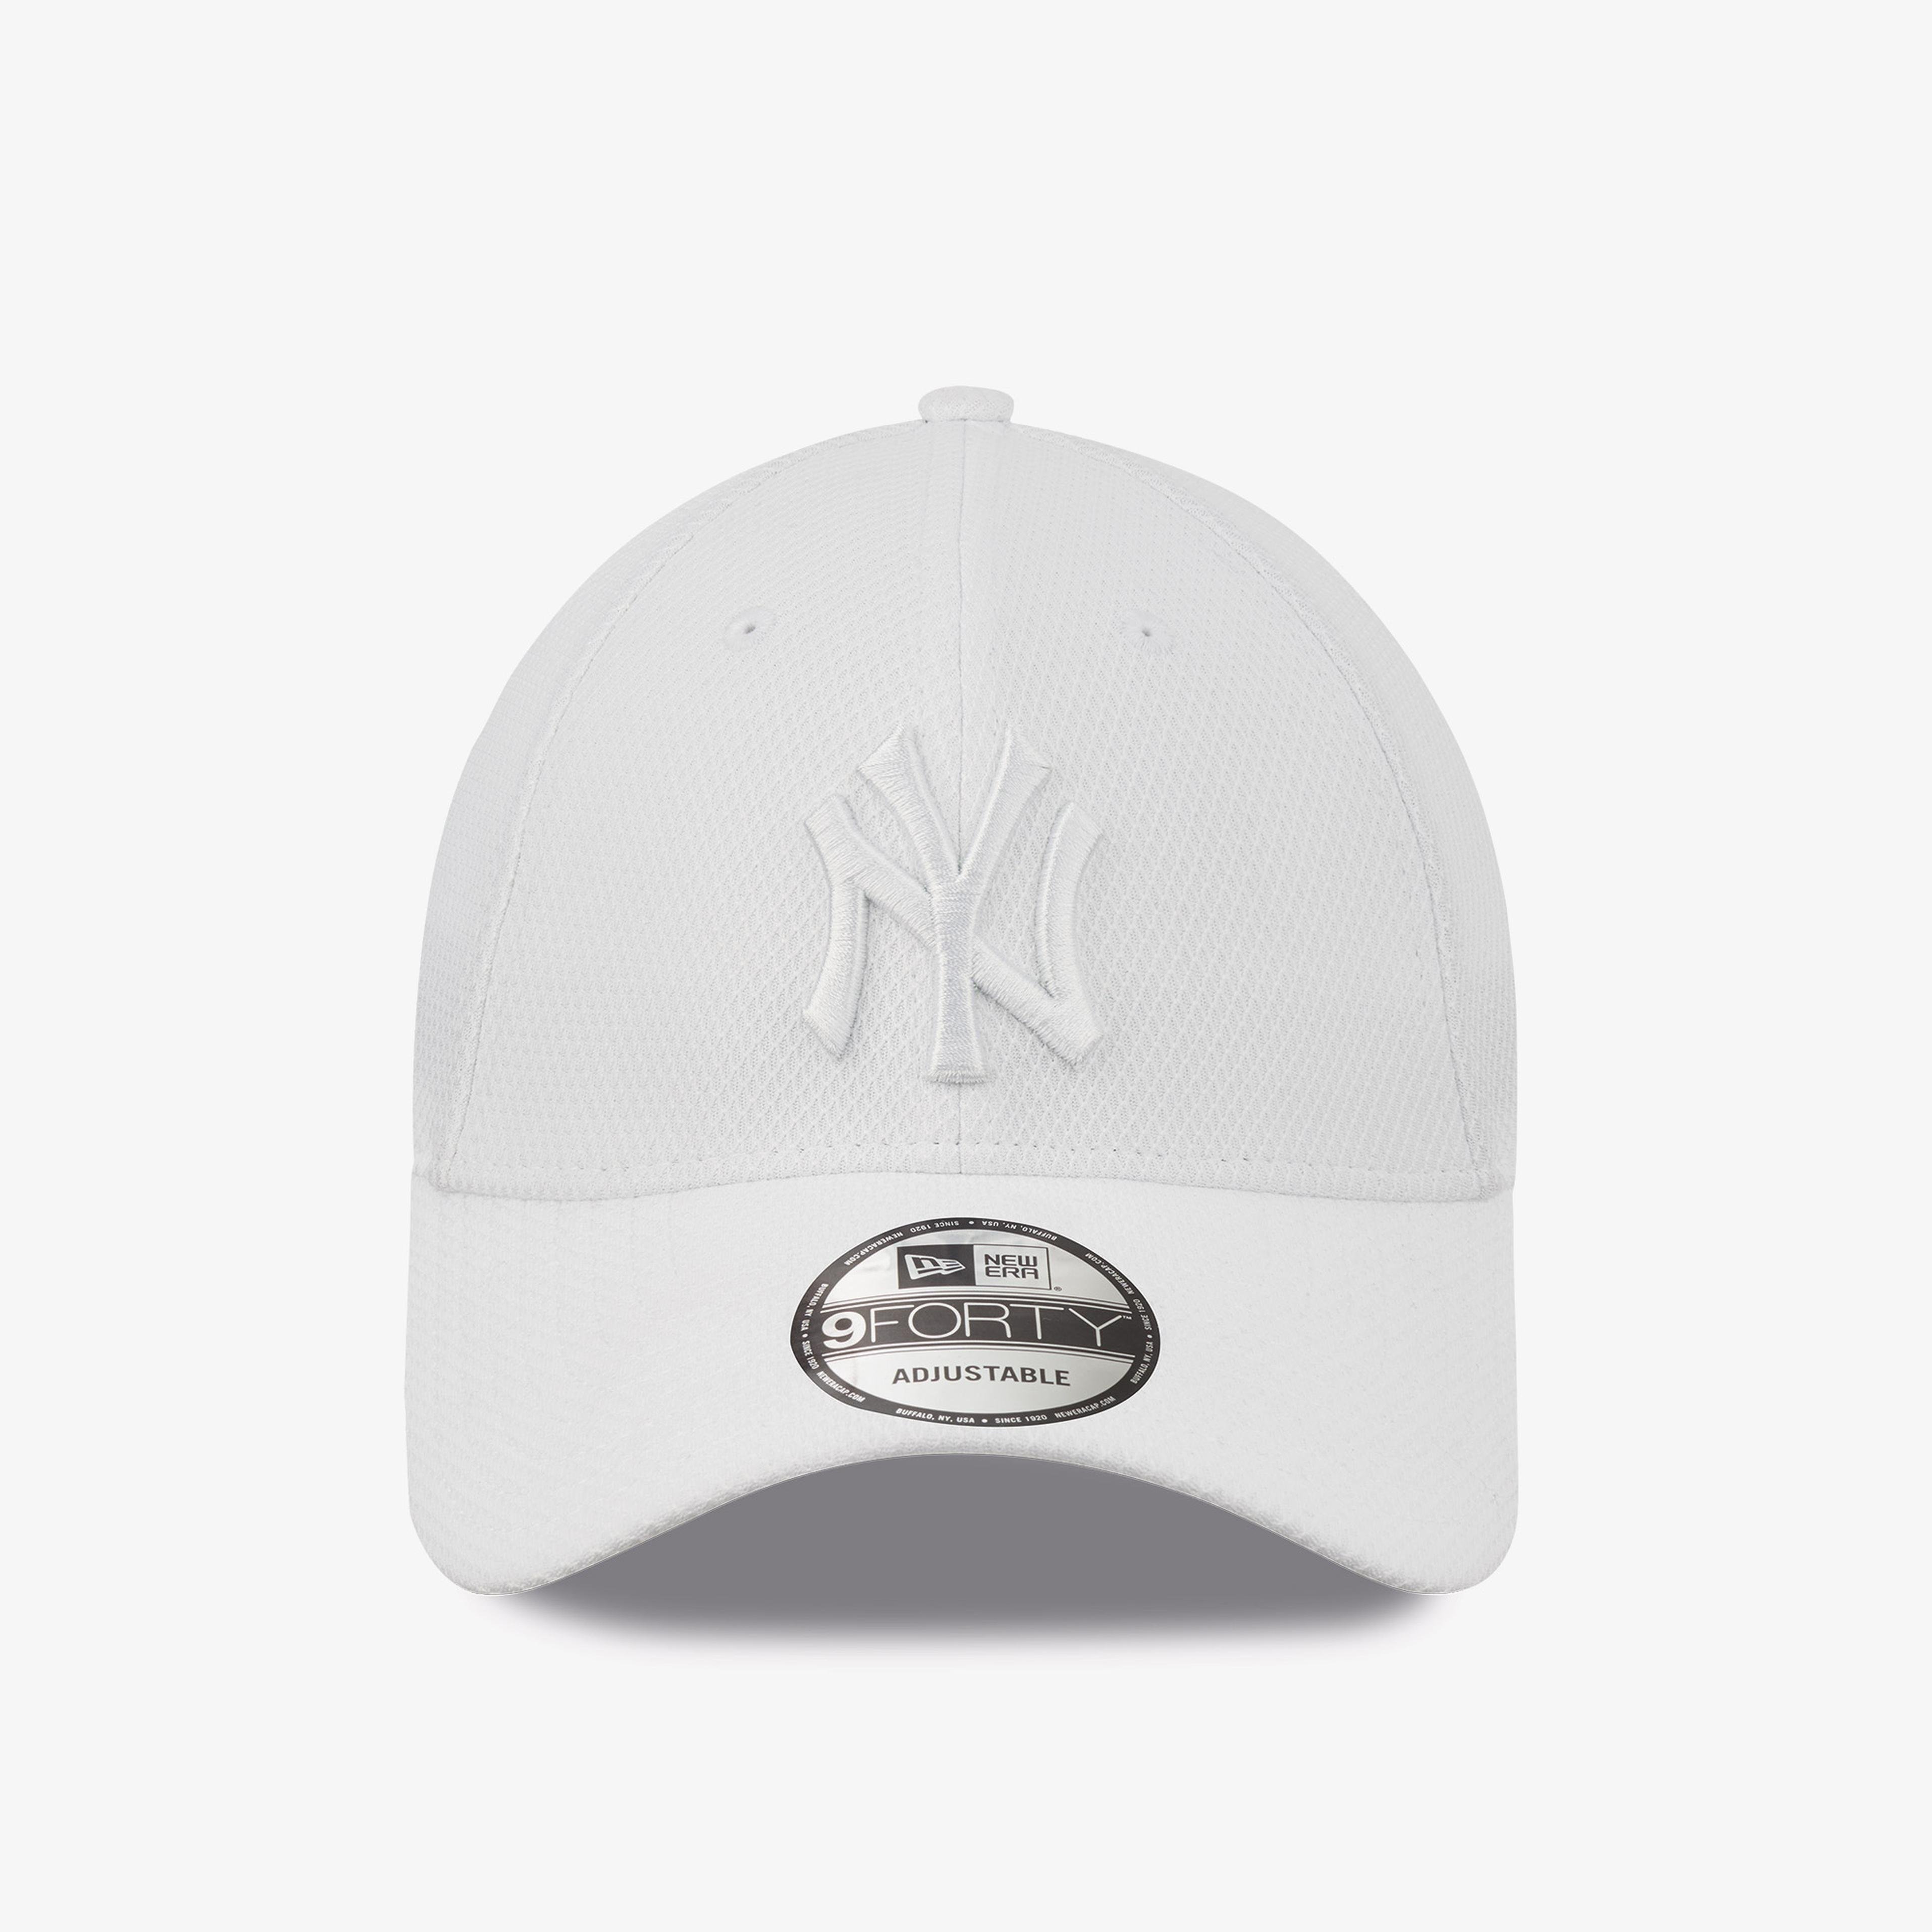 New Era Diamond Era 9Forty Unisex Beyaz Şapka